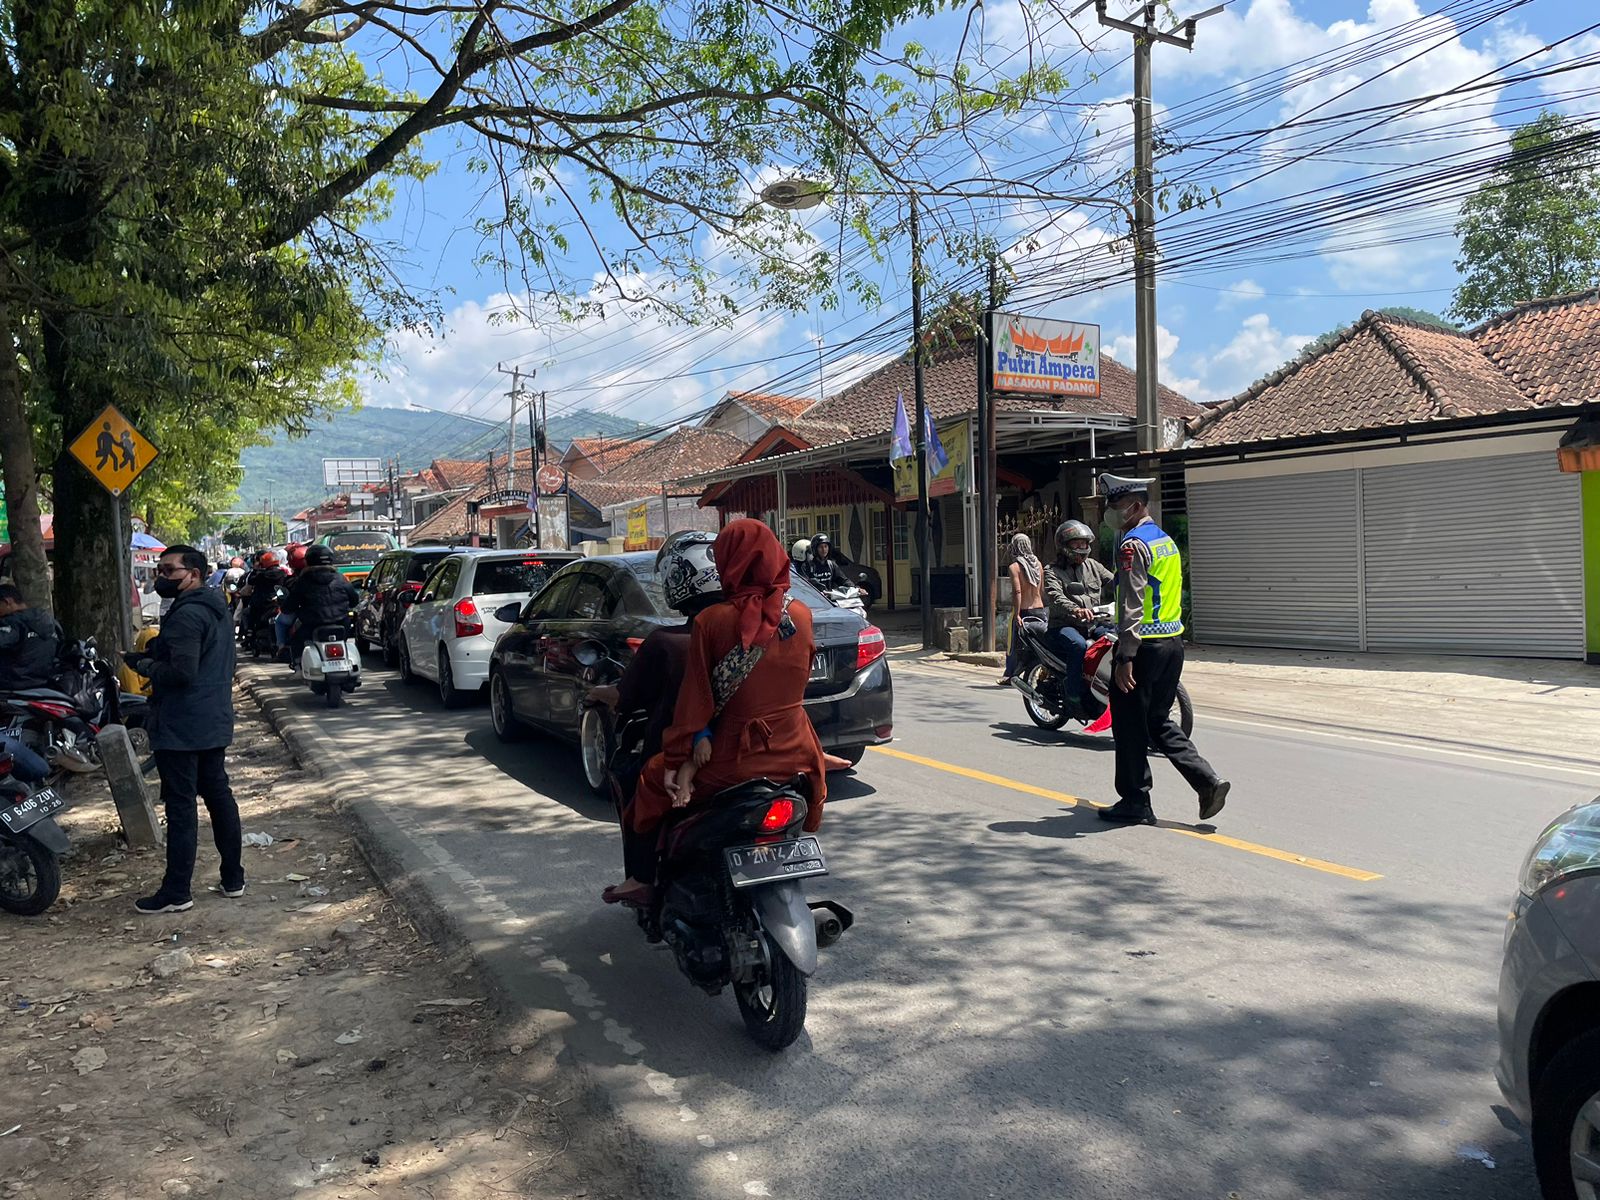 Volume kendaraan menuju lokasi wisata di Kabupaten Bandung nampak antre. (Agi/Jabar Ekspres)